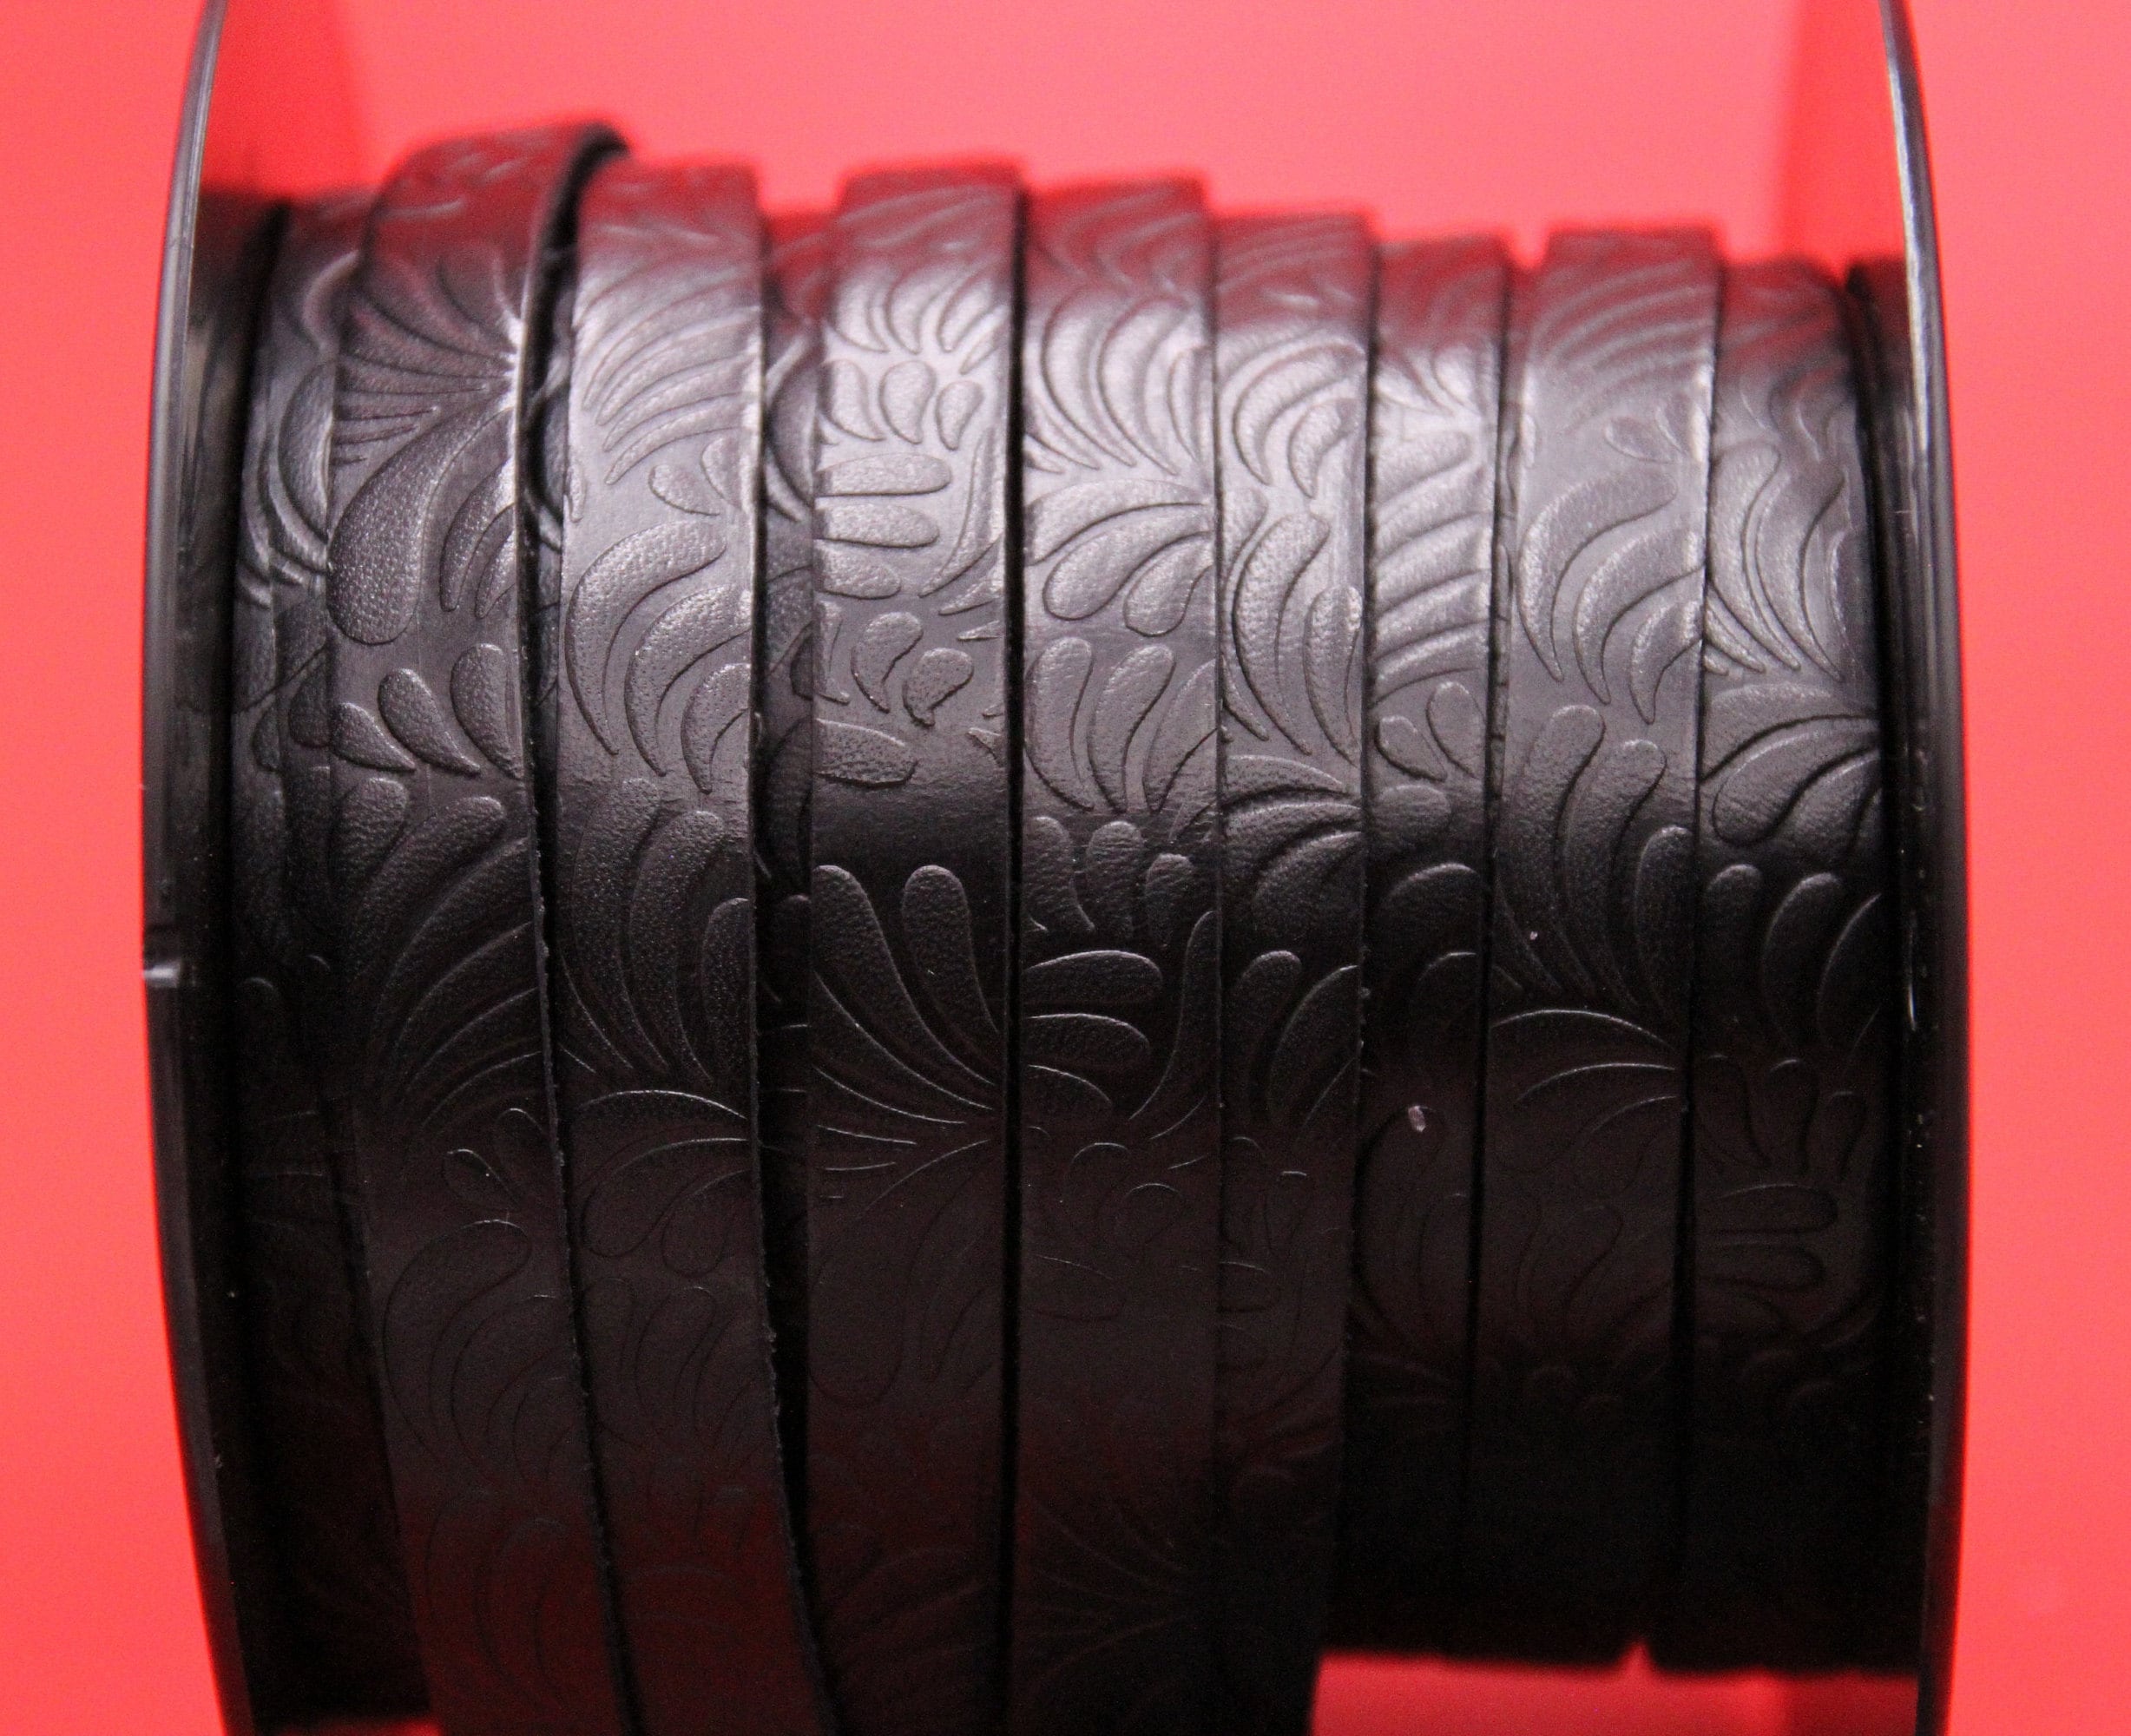 Mandala Crafts Genuine 1/2 inch Wide Black Leather Strap - Flat Black Leather Strips - 6 Feet Long Cowhide Cord Leather Straps for Crafts Leather